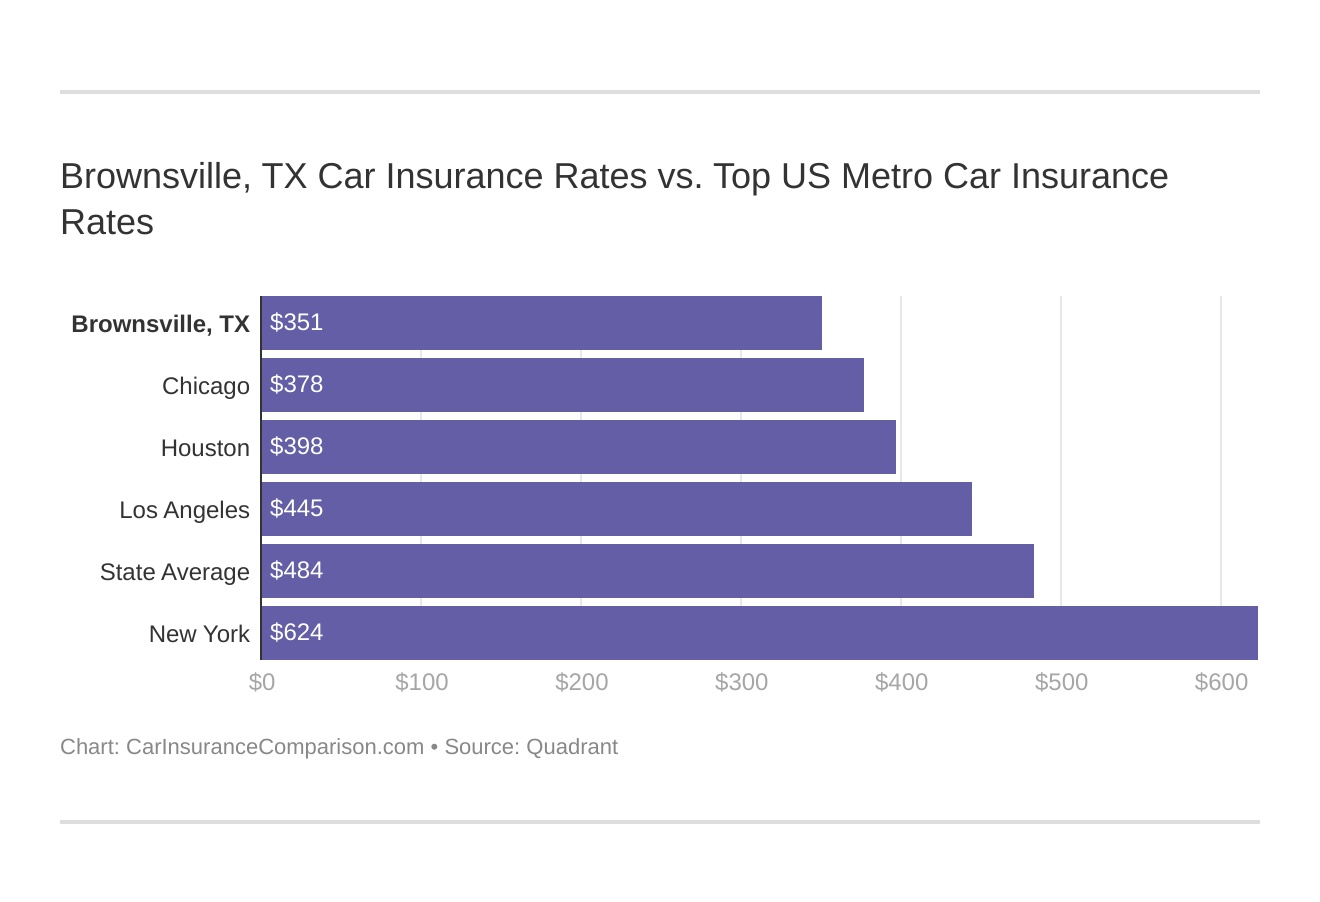 Brownsville, TX Car Insurance Rates vs. Top US Metro Car Insurance Rates